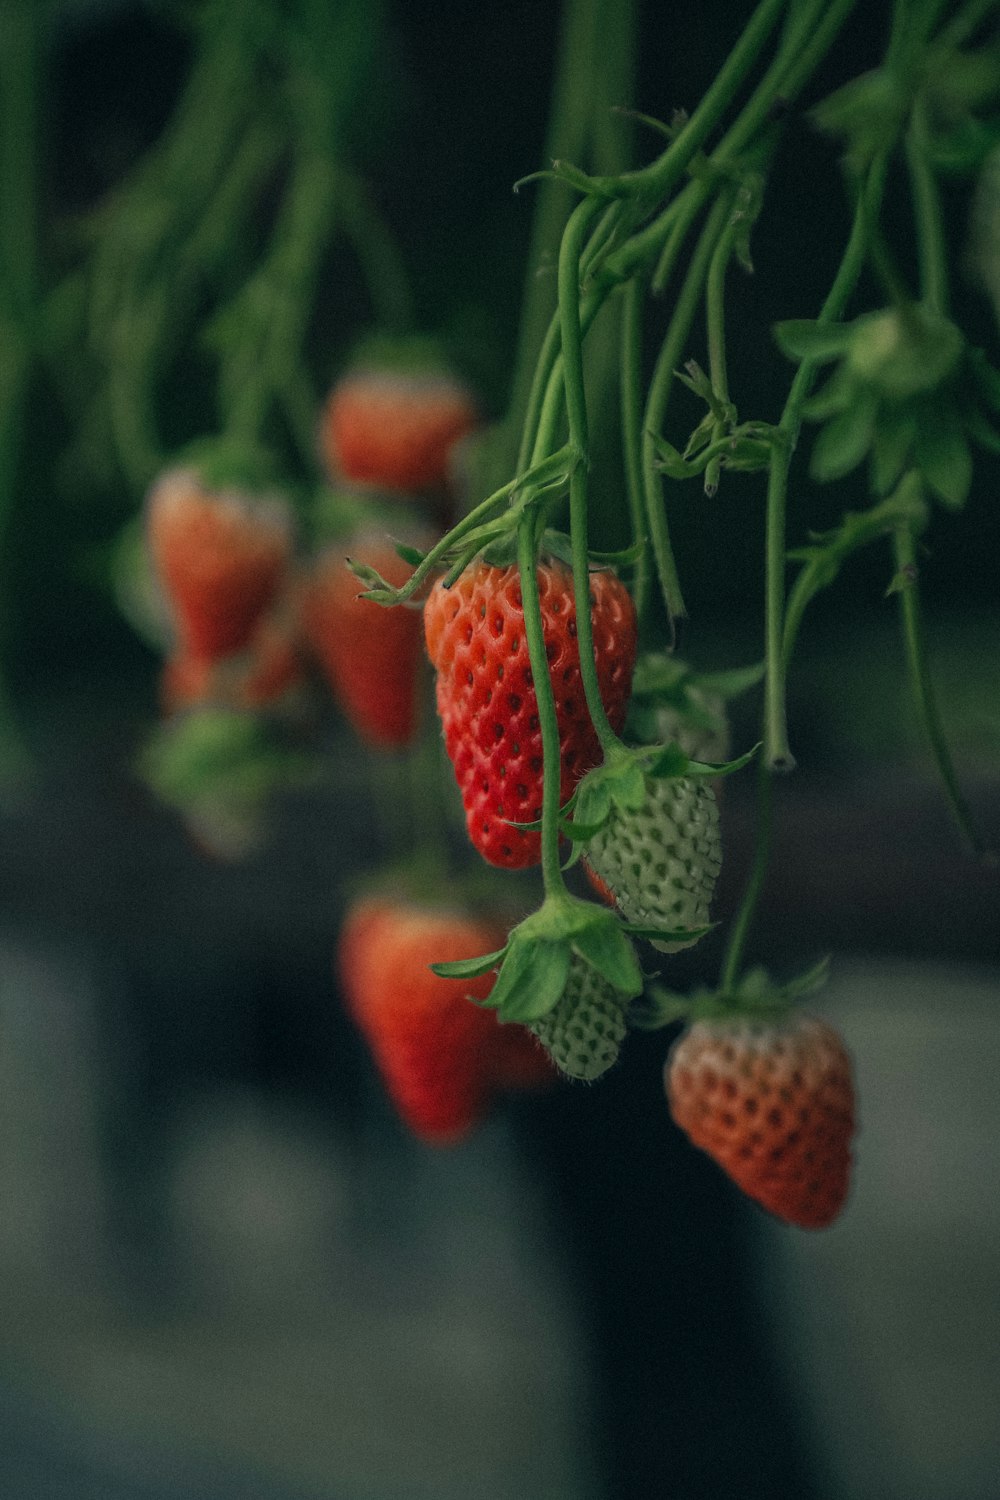 red strawberries